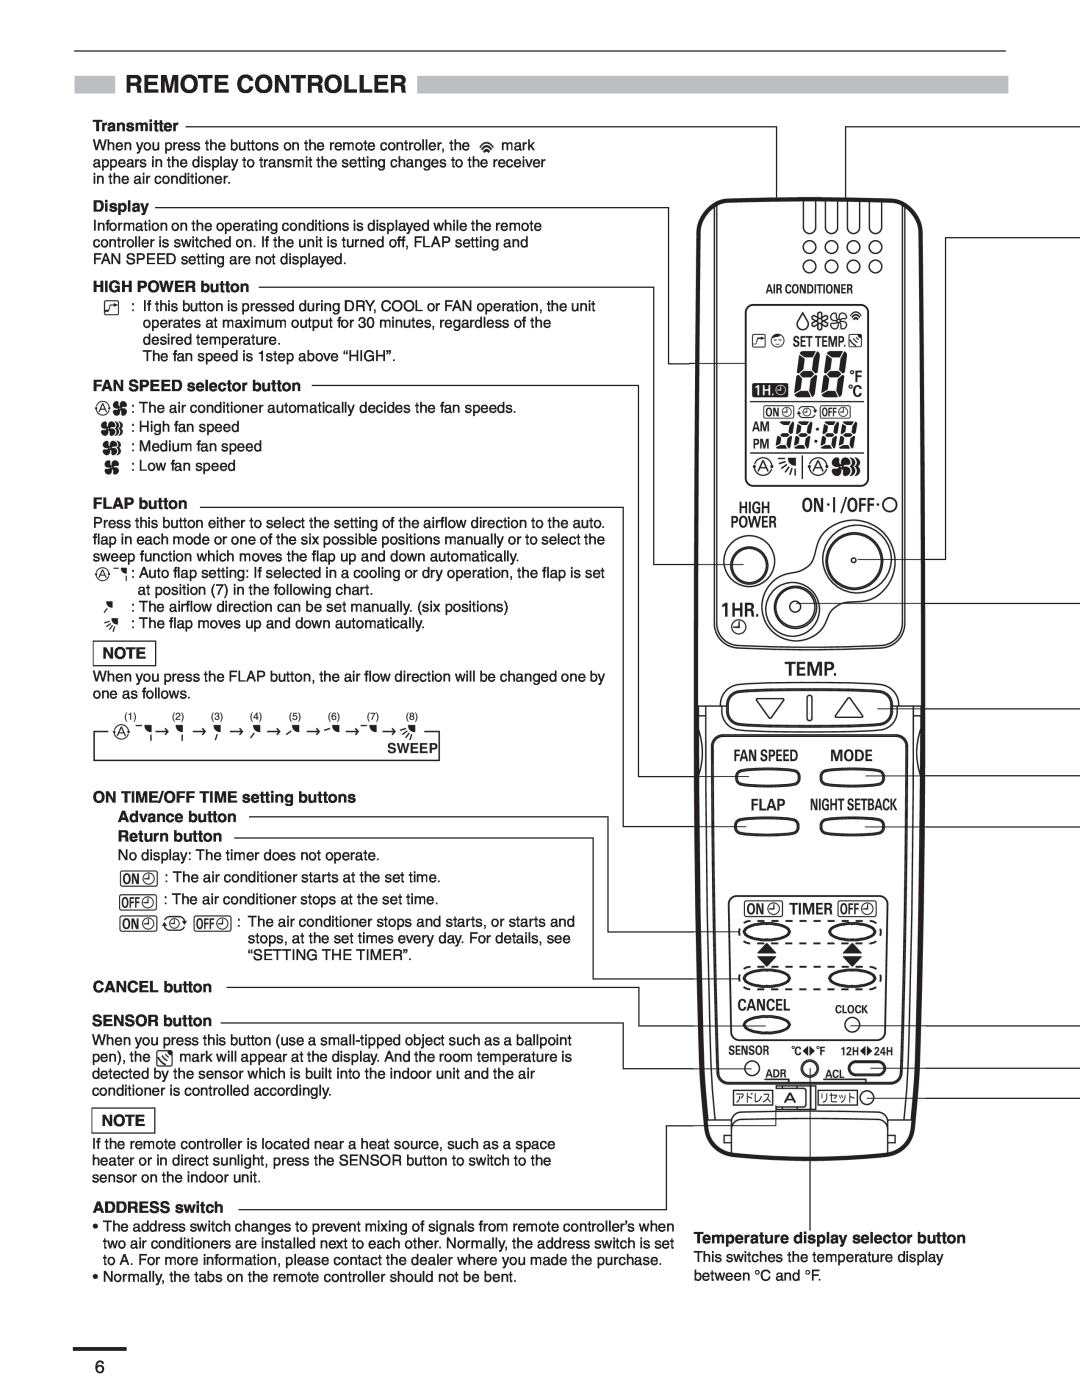 Panasonic R410A service manual Remote Controller 